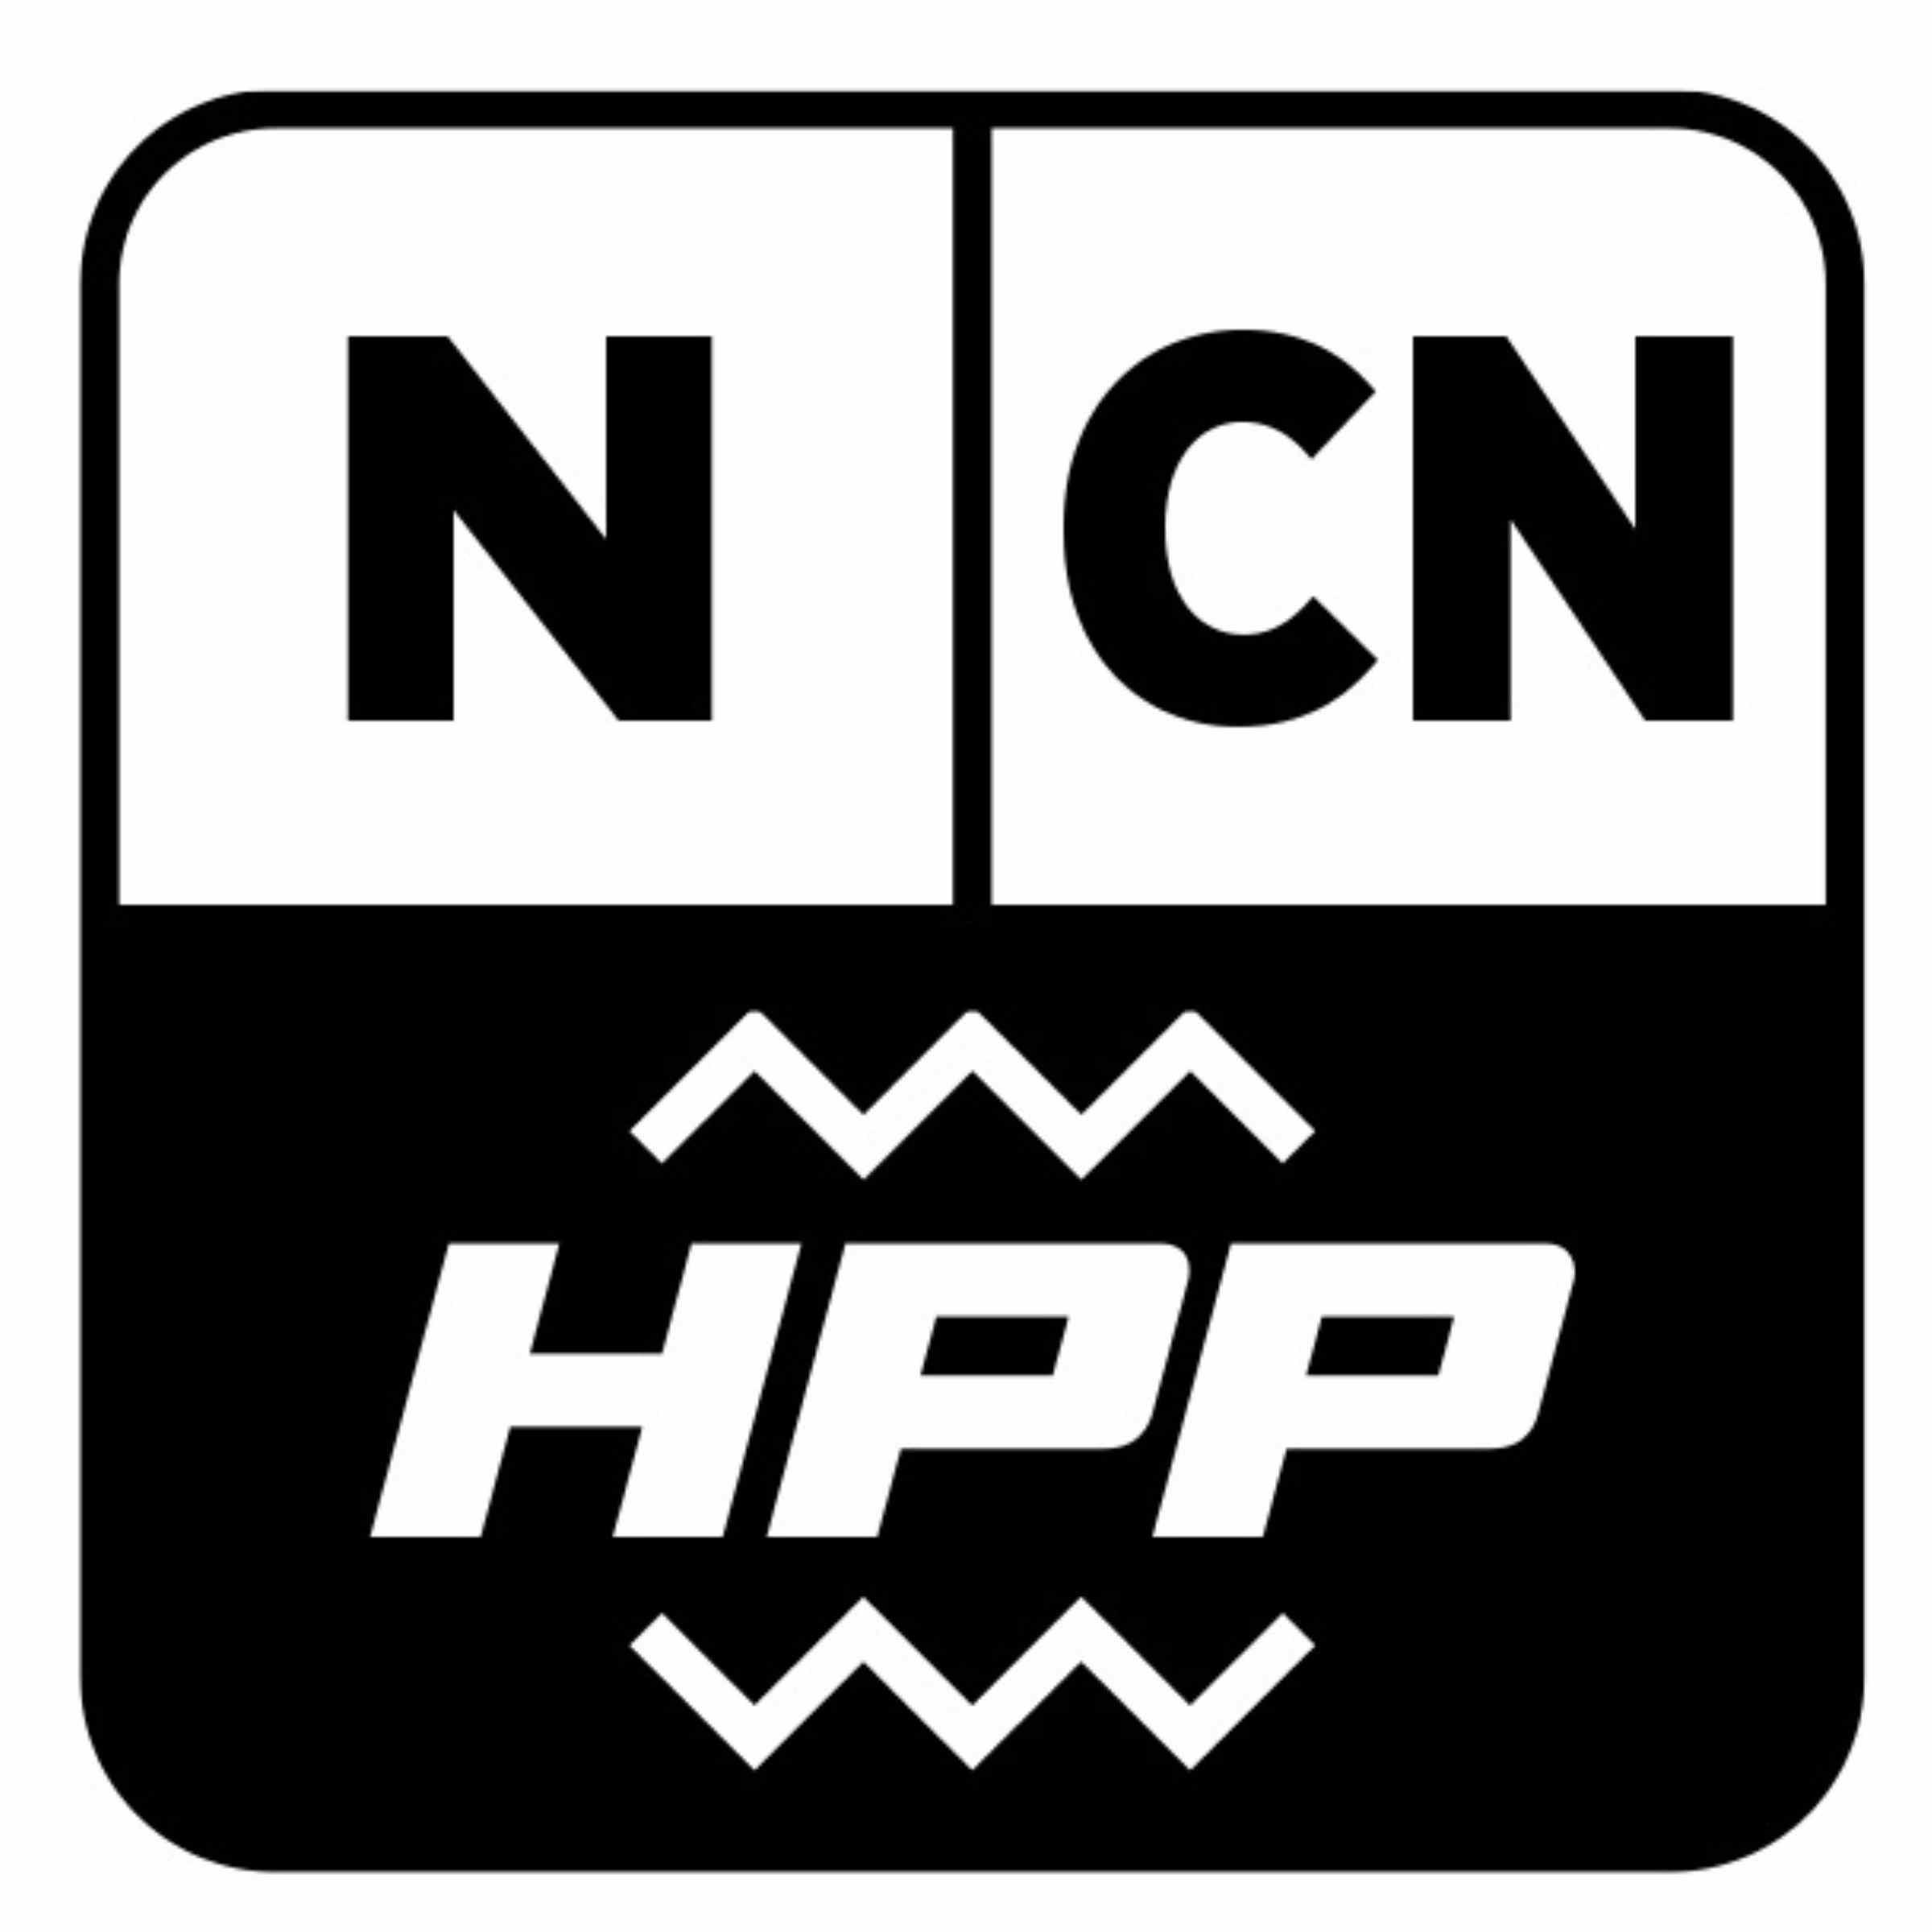 Nick, Continuous Nick & HPP Vibration 